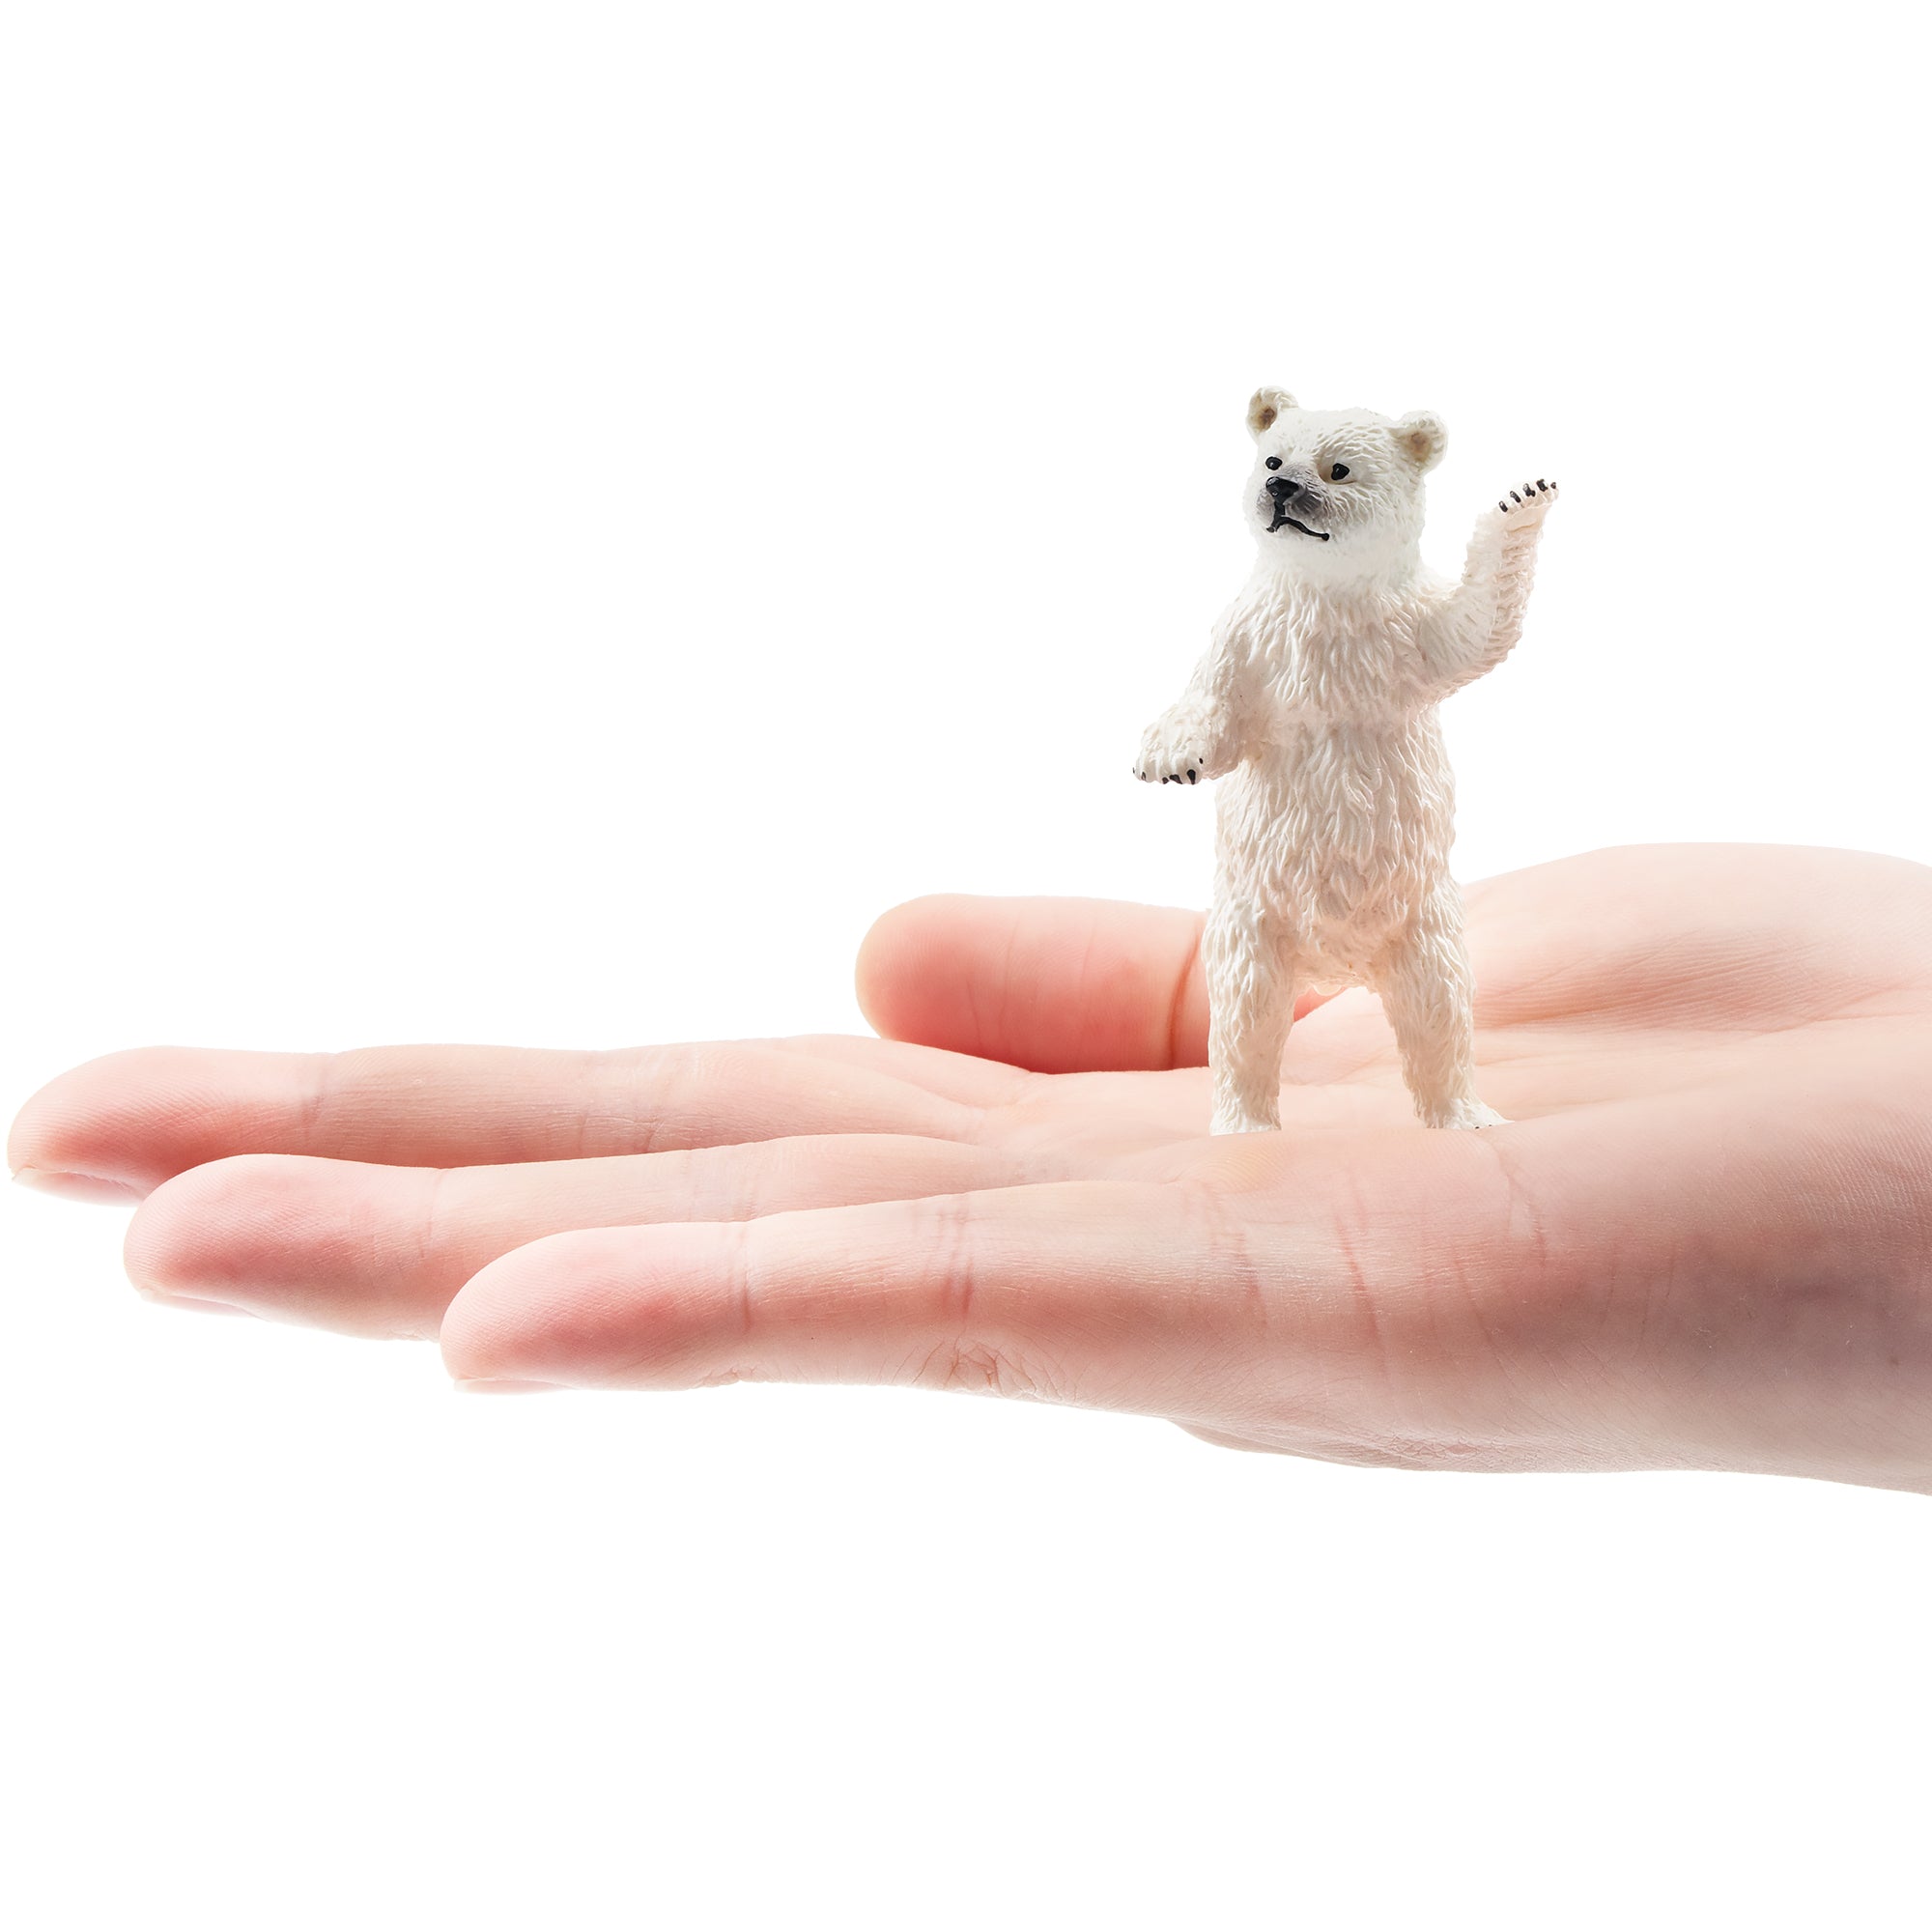 Toymany Standing Polar Bear Cub Figurine Toy-on hand